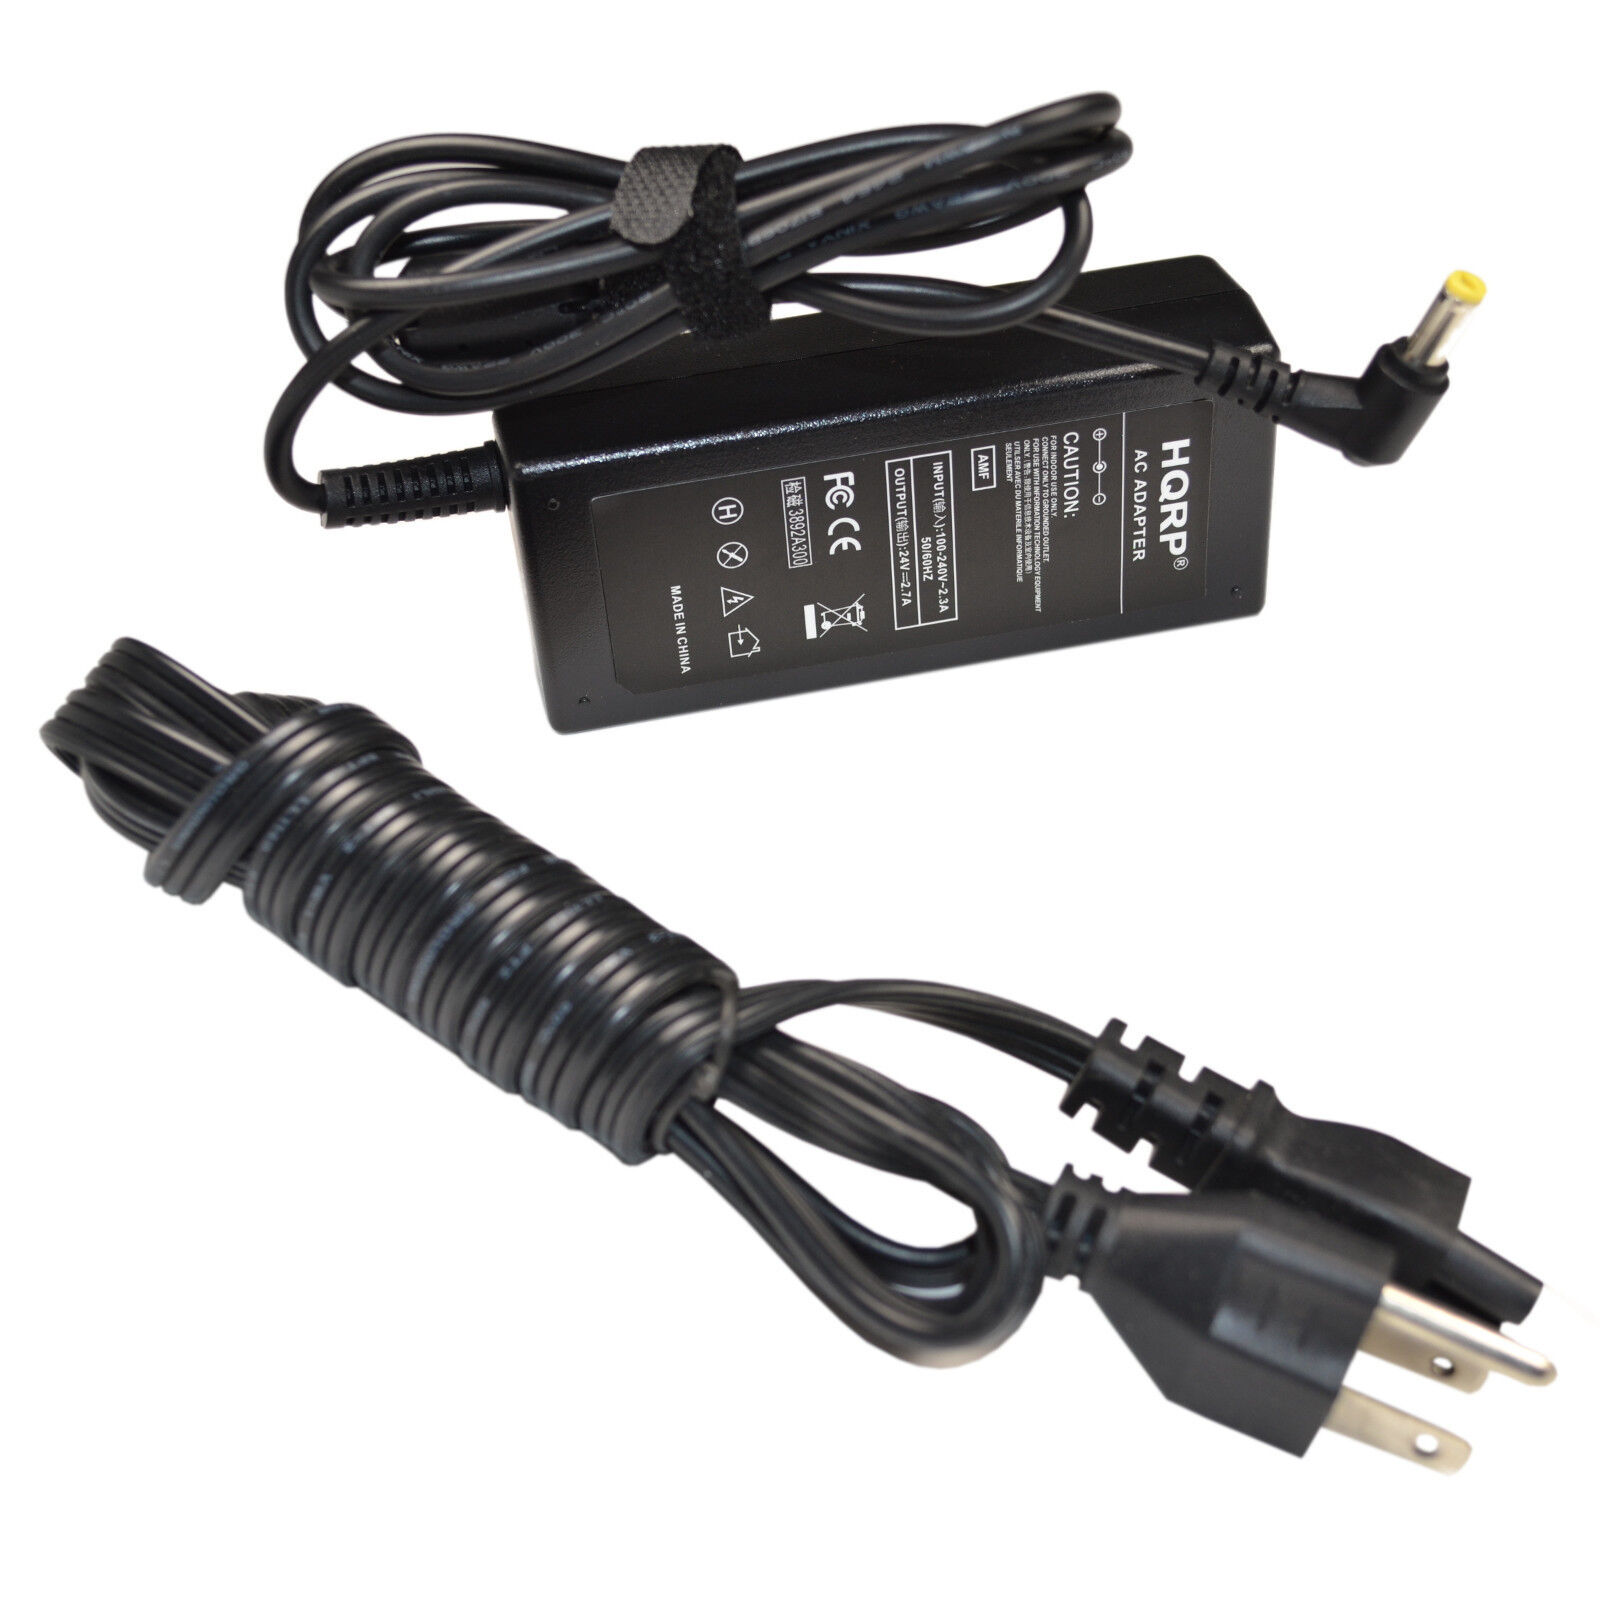 HQRP AC Power Adapter for Vizio VSB201 VSB202 VSB205 VSB212 Soundbar